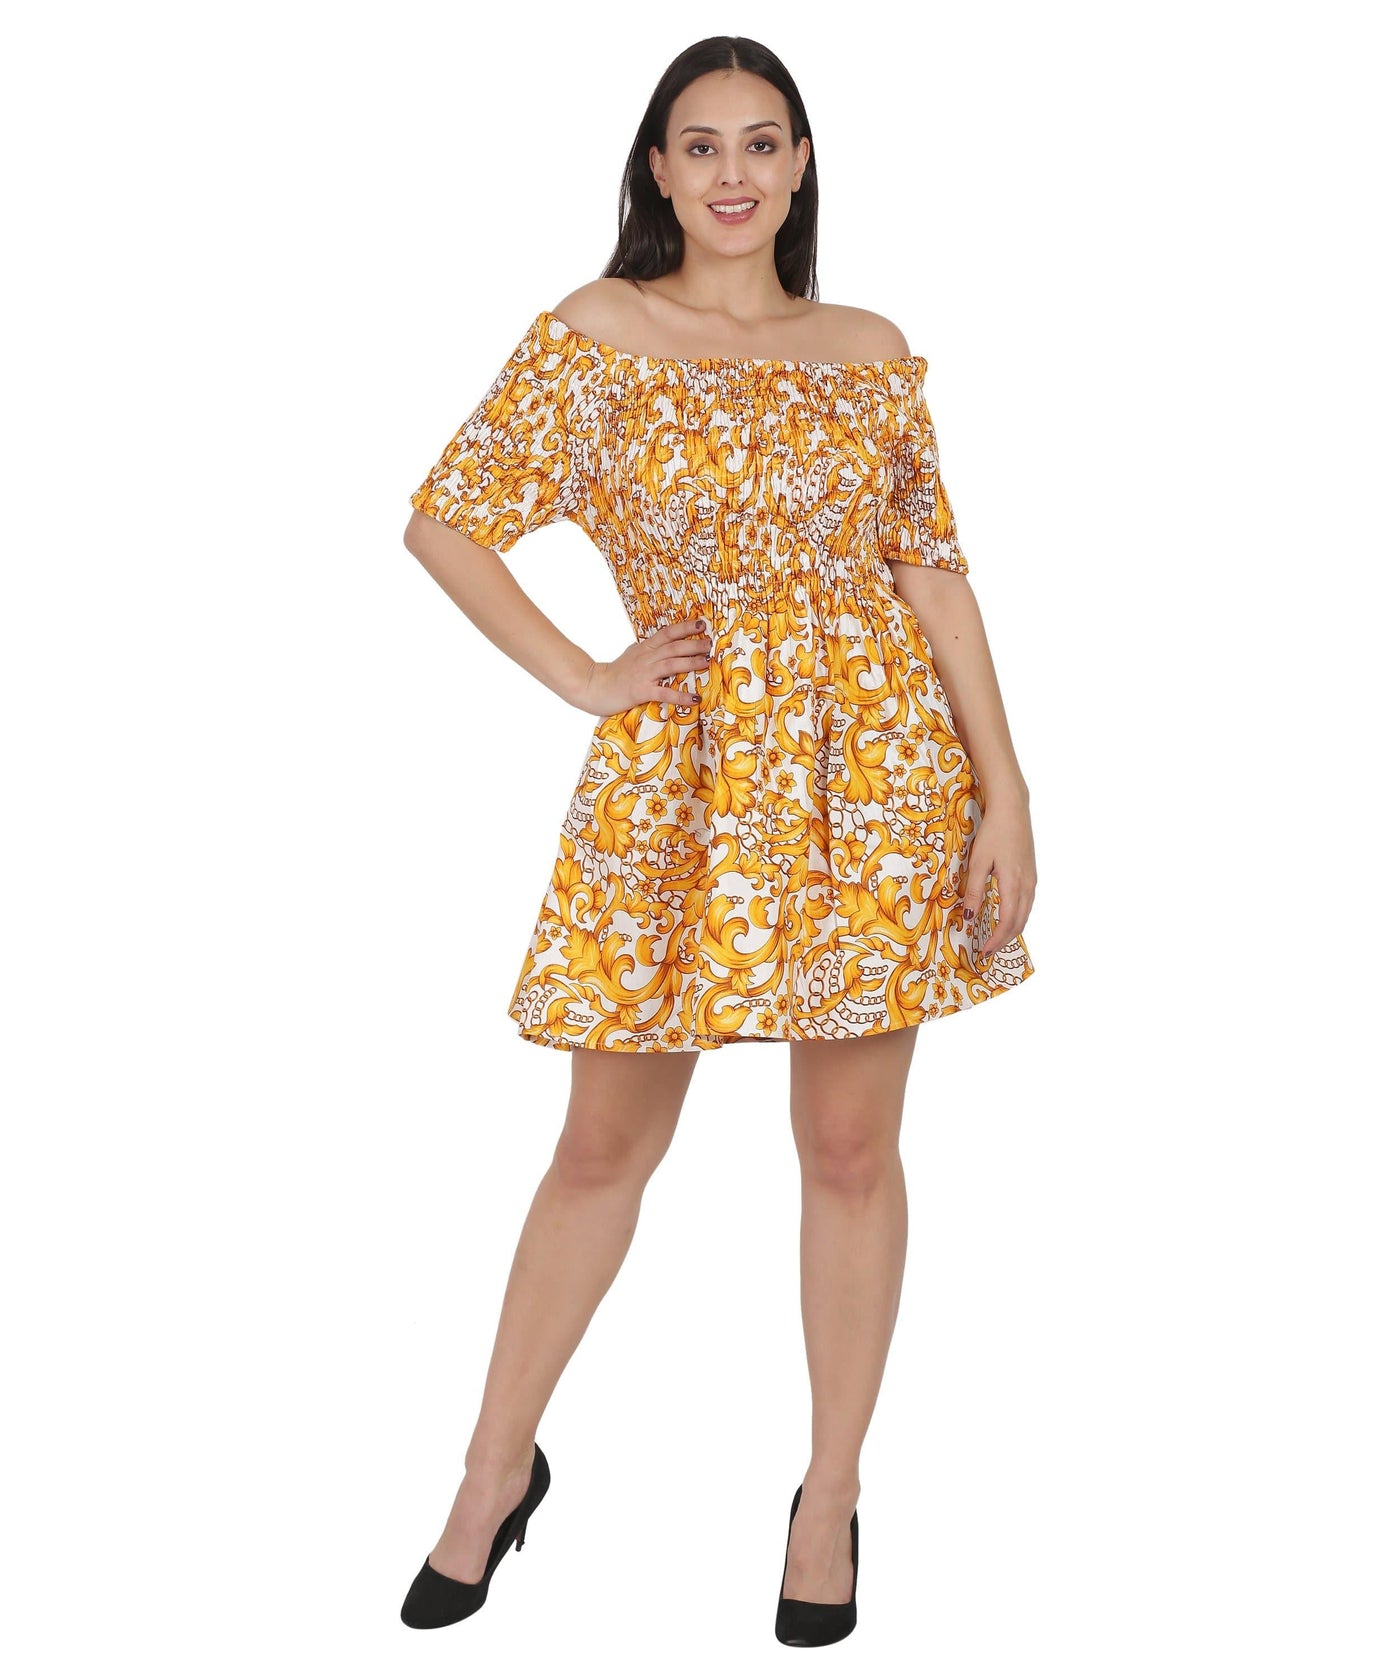 Nairobi African Print Dress 2160 - Advance Apparels Inc